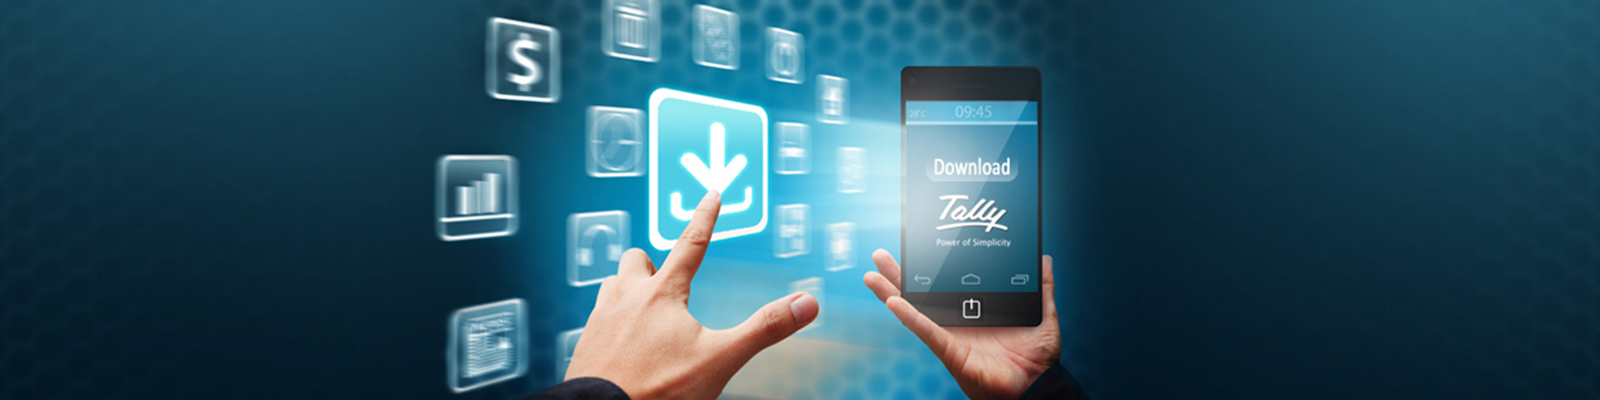 TallyPrime Business management software download UAE